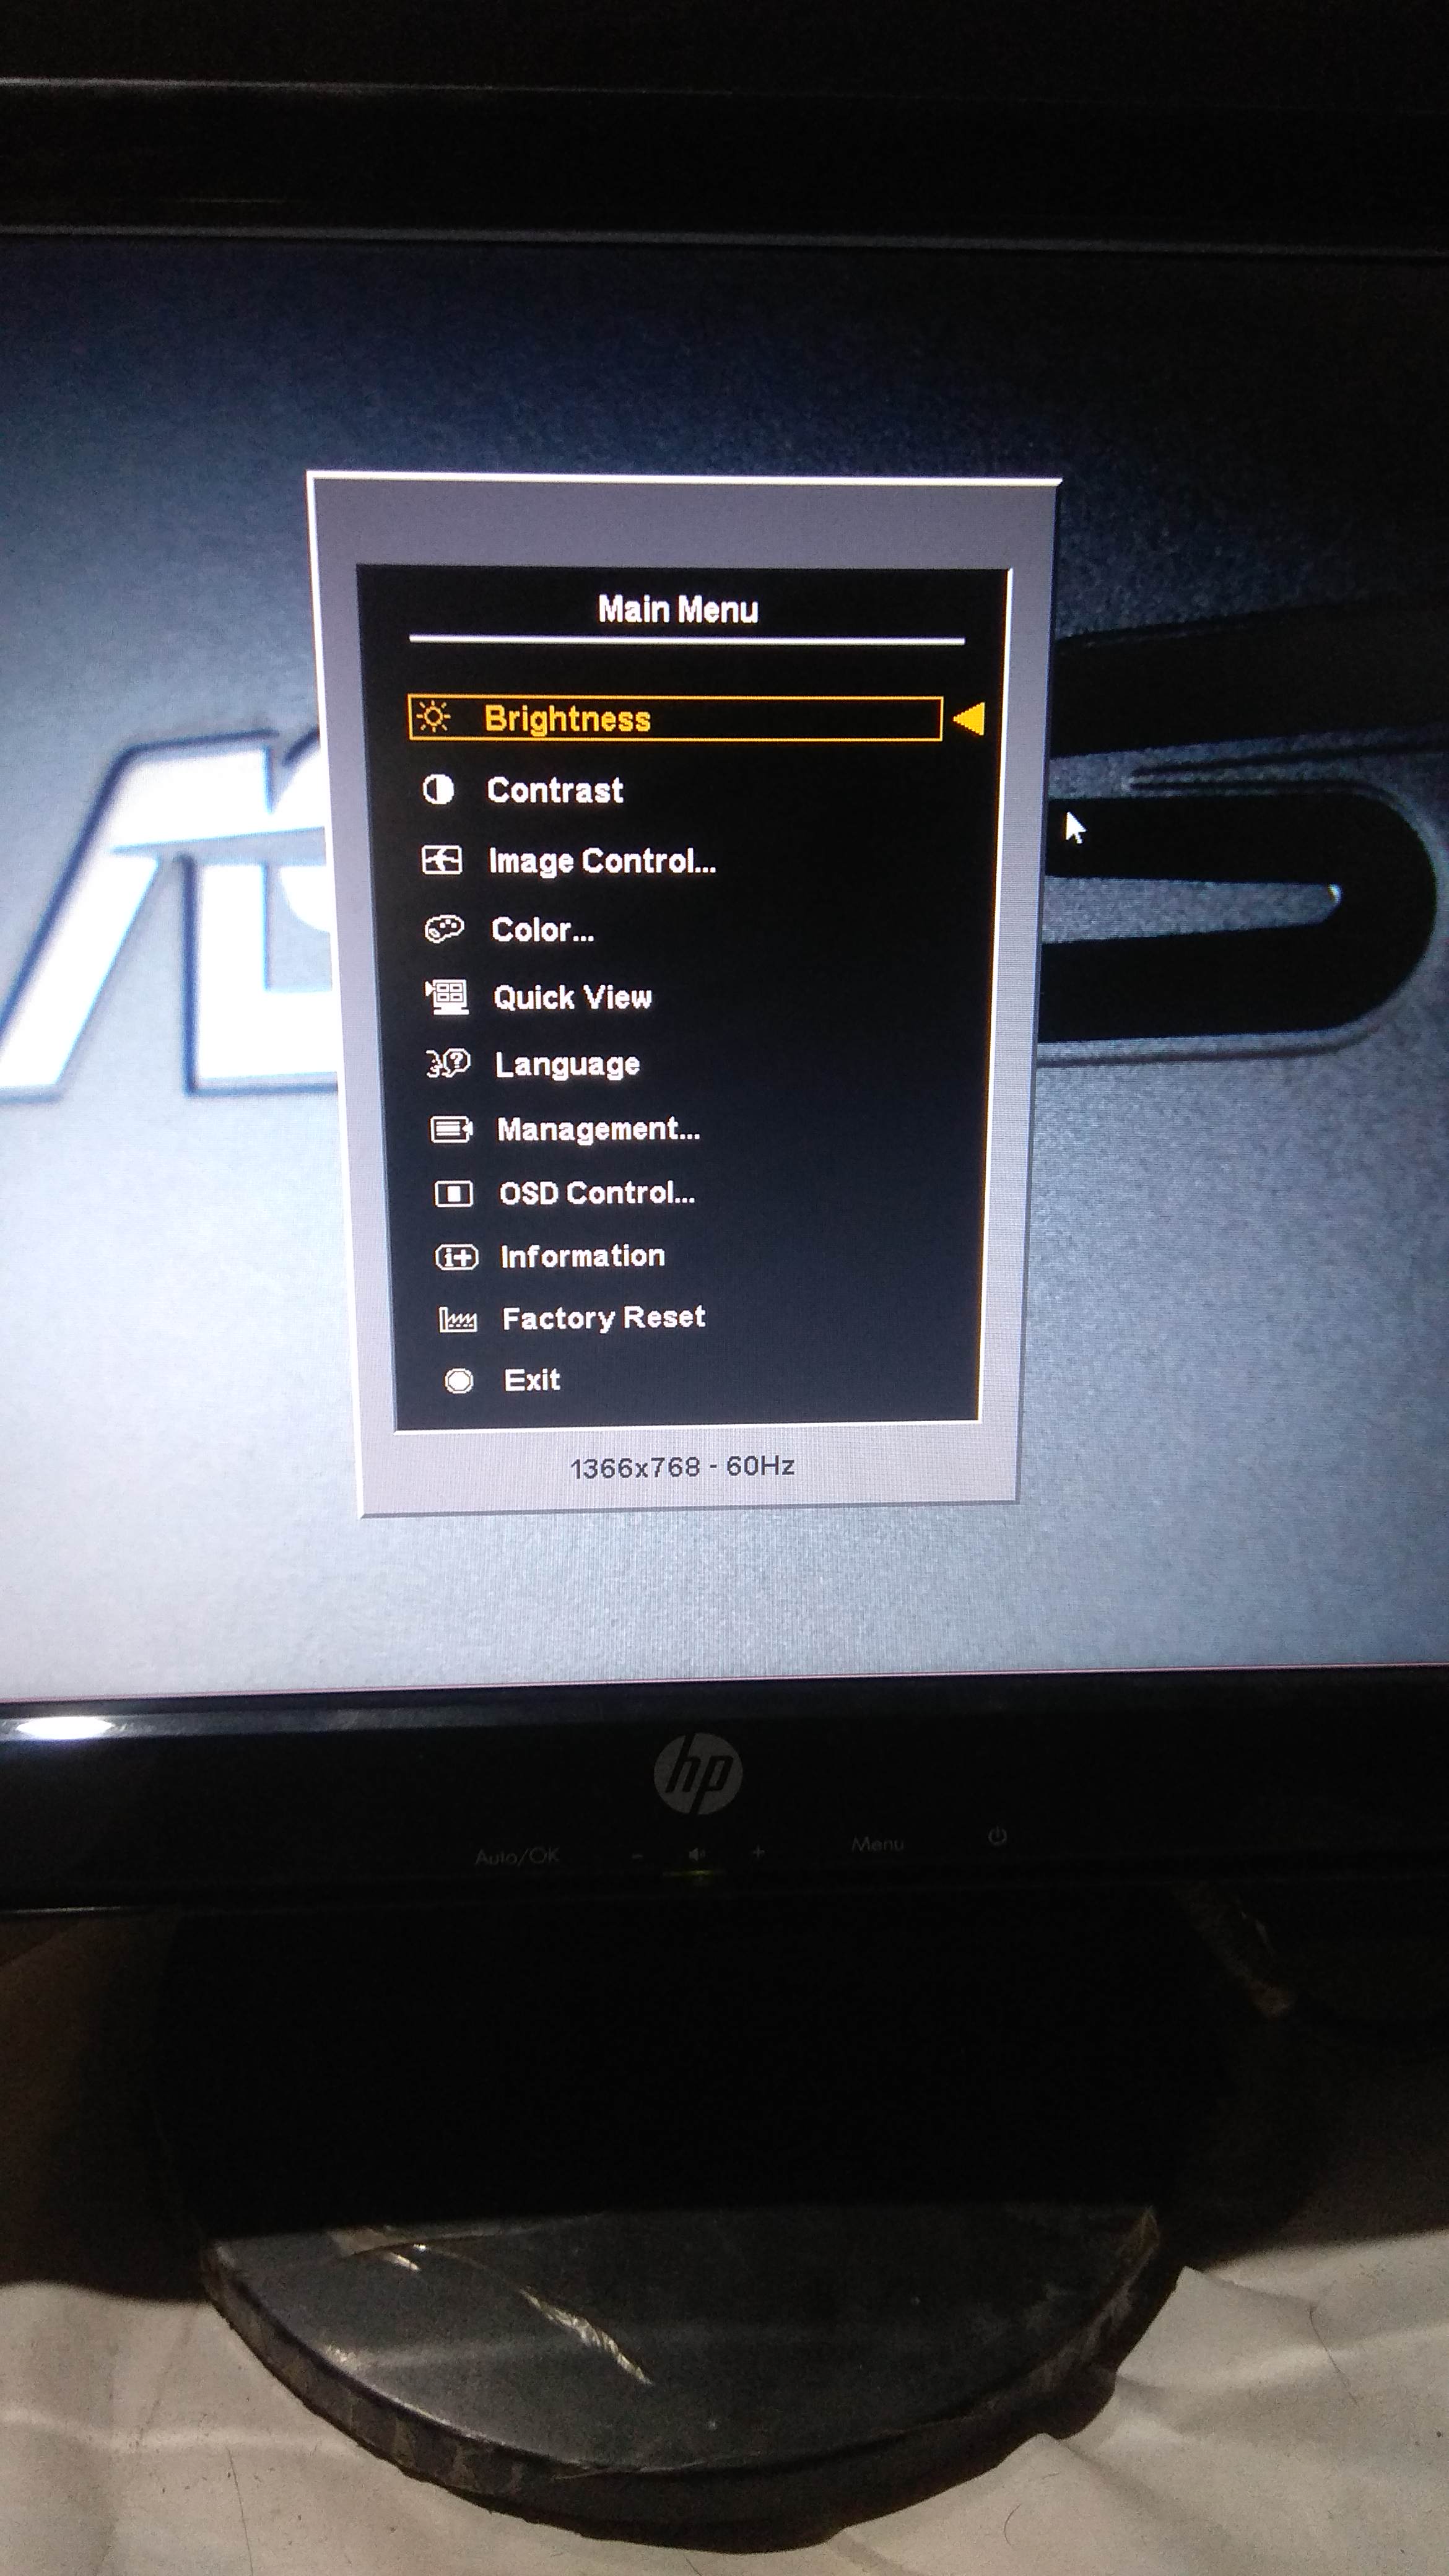 A desktop menu popup on the screen - HP Support Community - 7252203